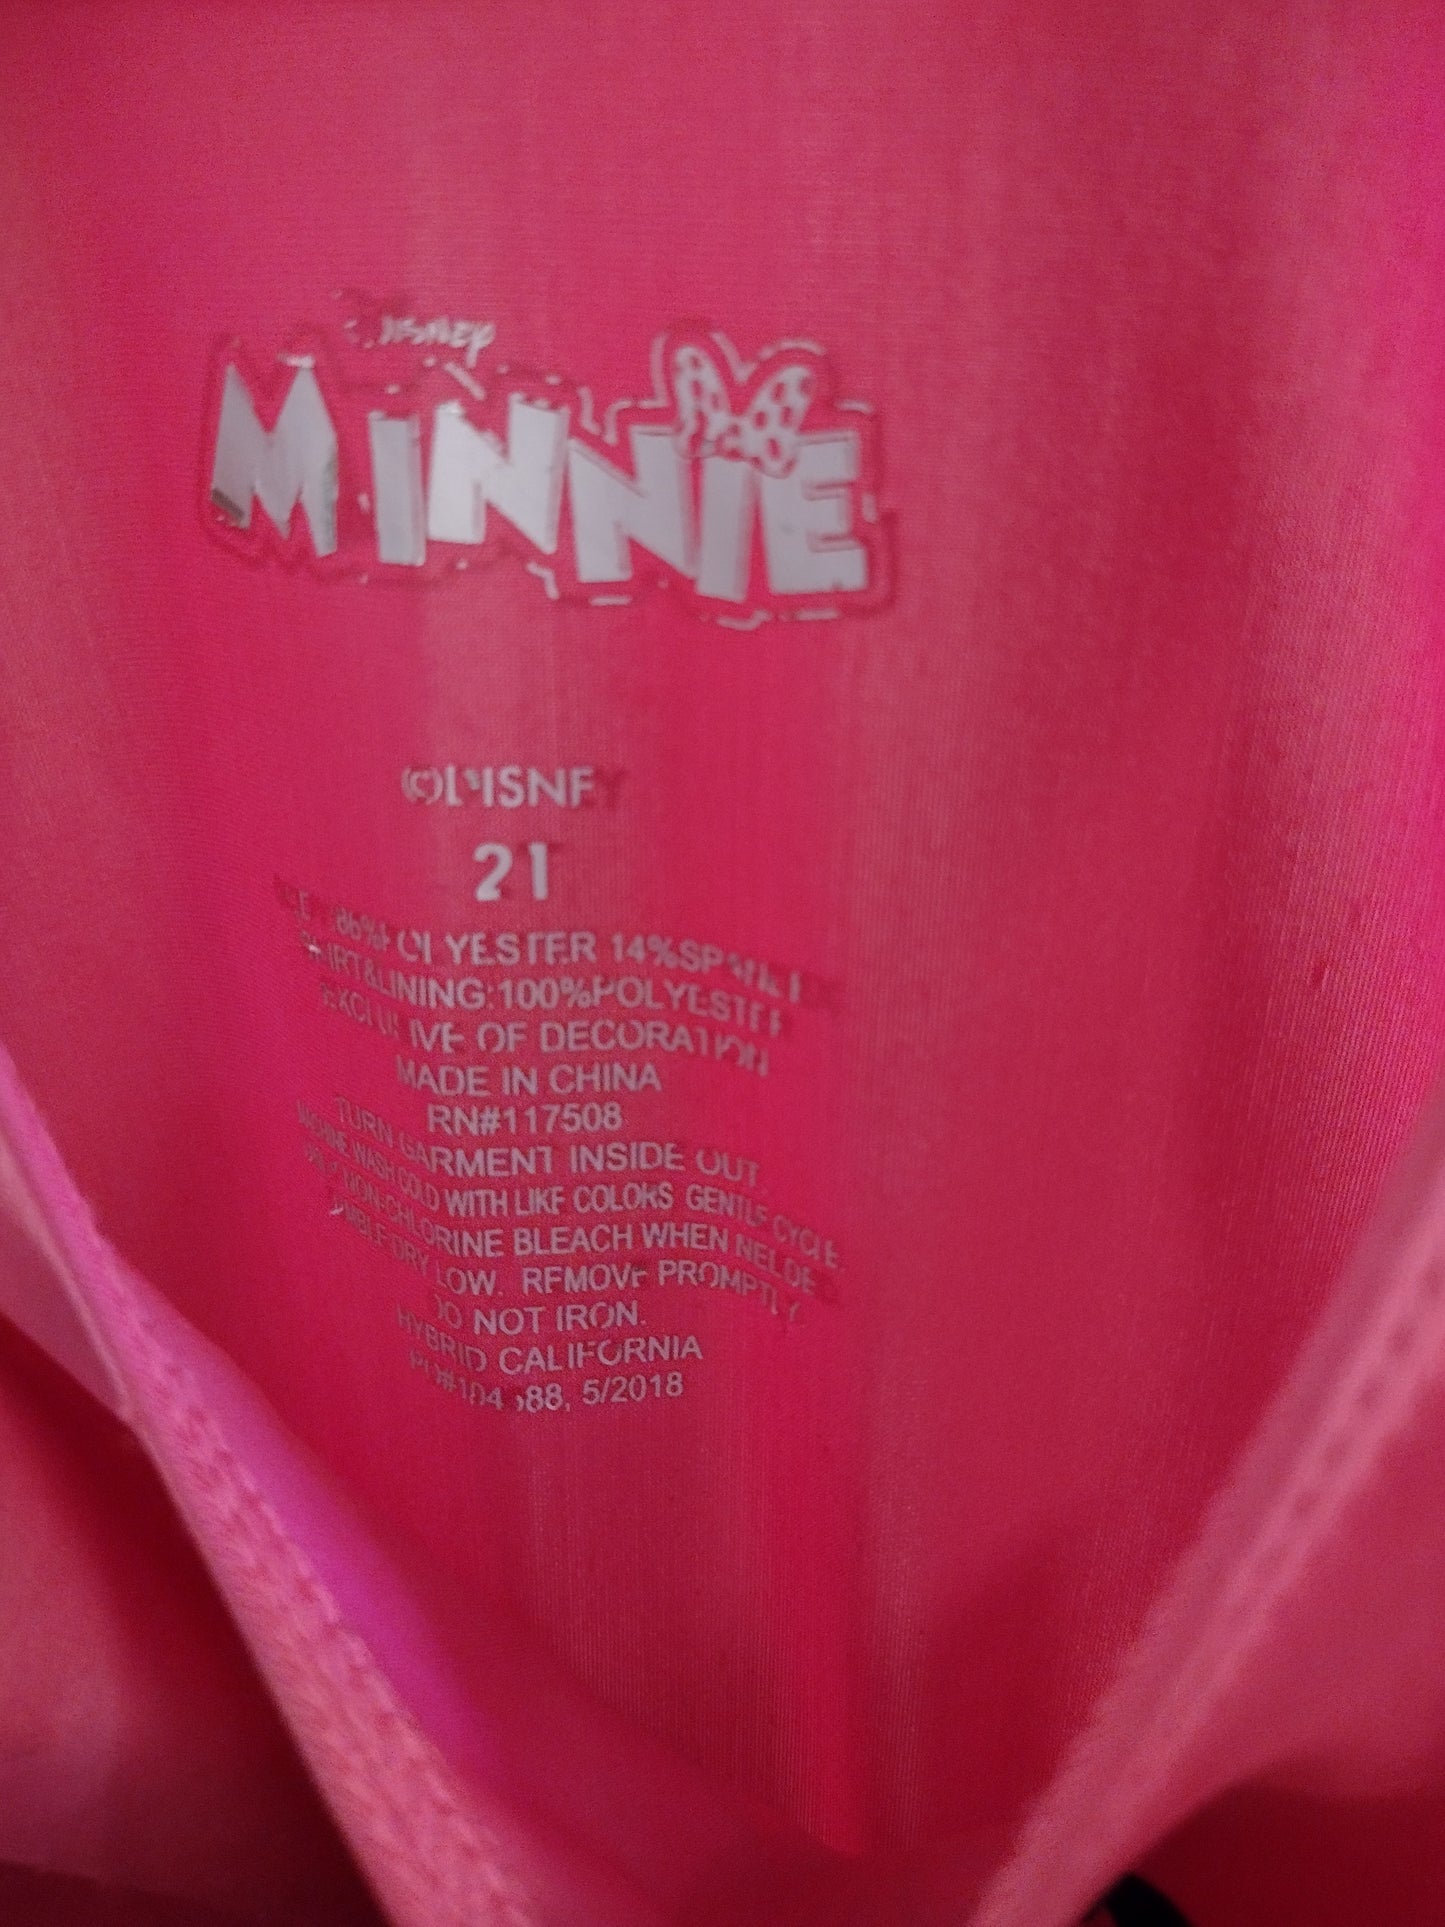 Disney Minnie Mouse Pink Leotard Tutu Dress Girls Fantasy Play Costume